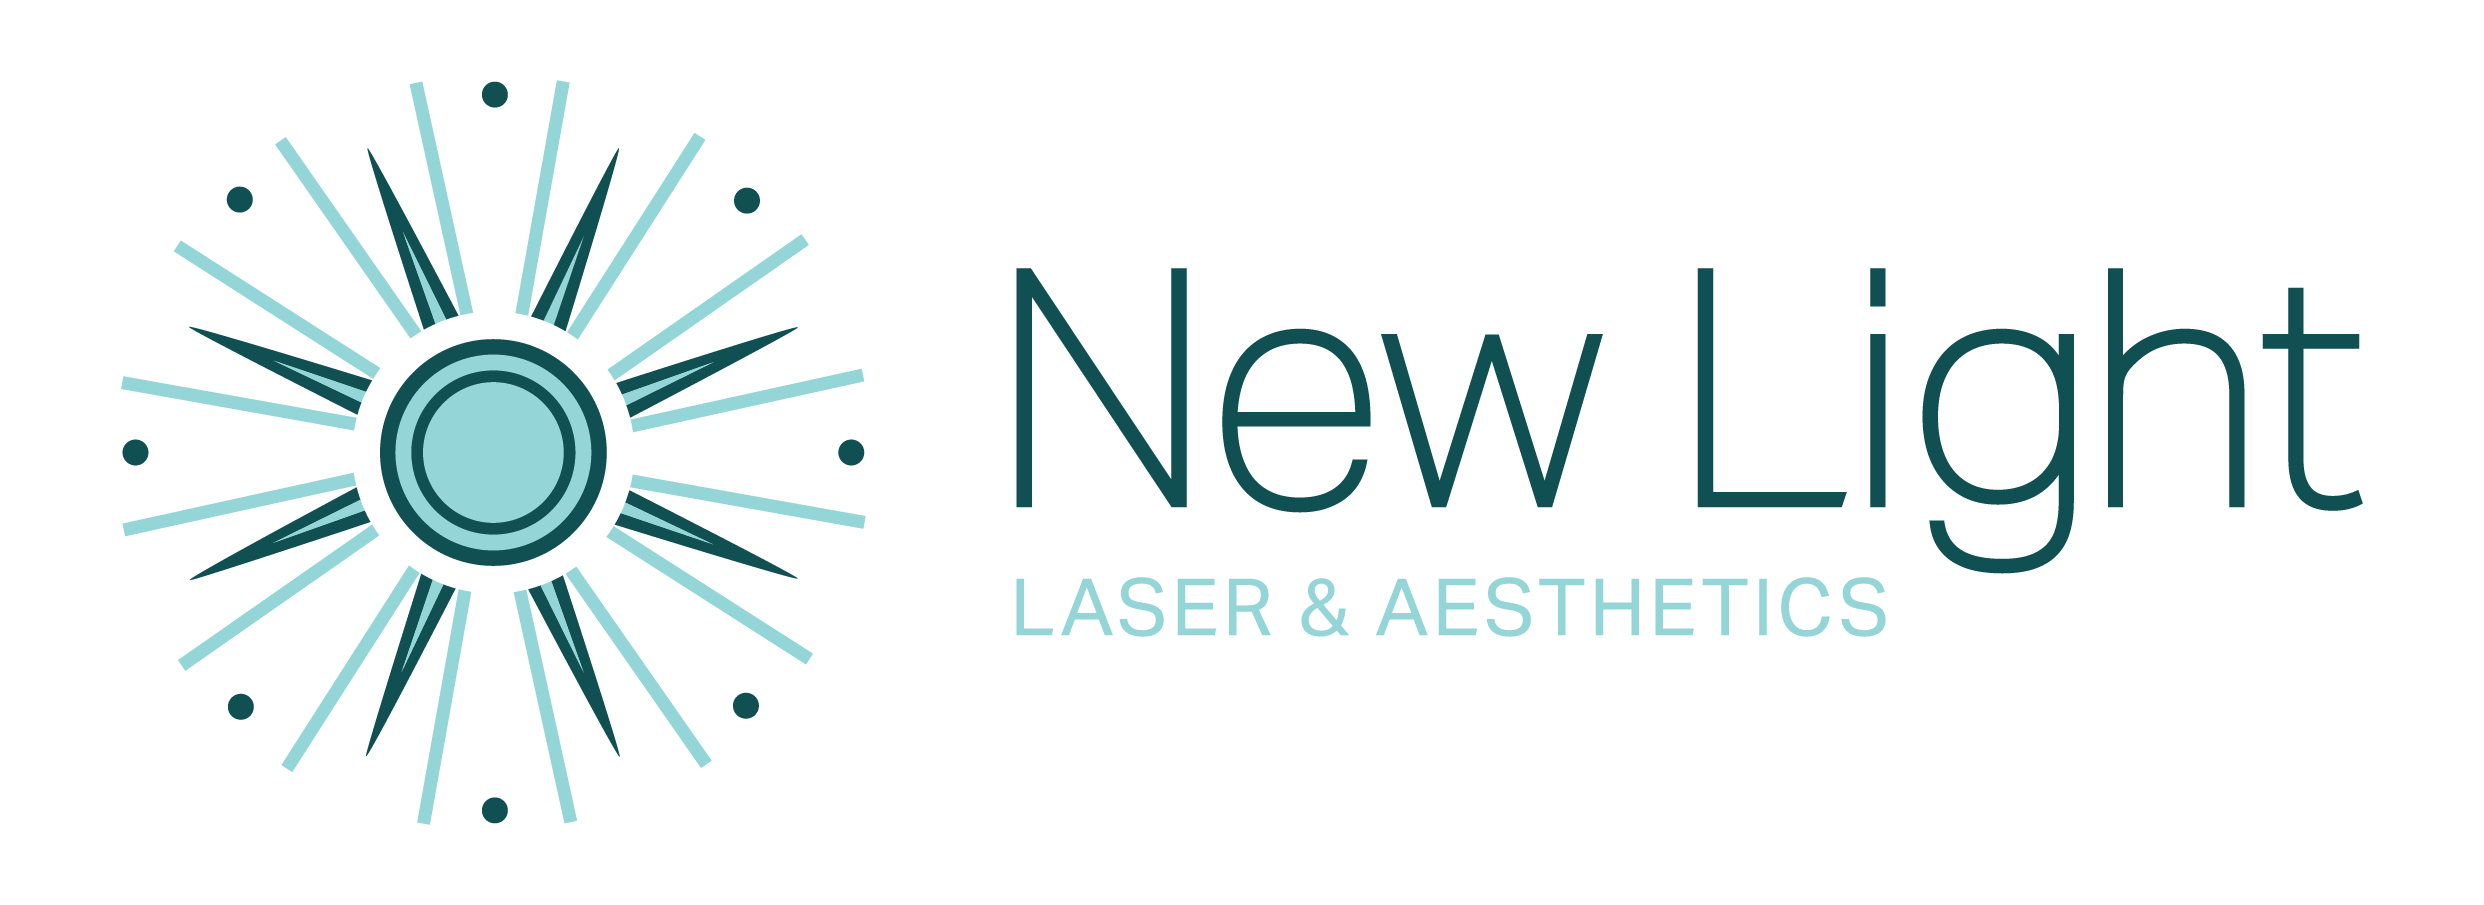 New Light Laser & Aesthetics